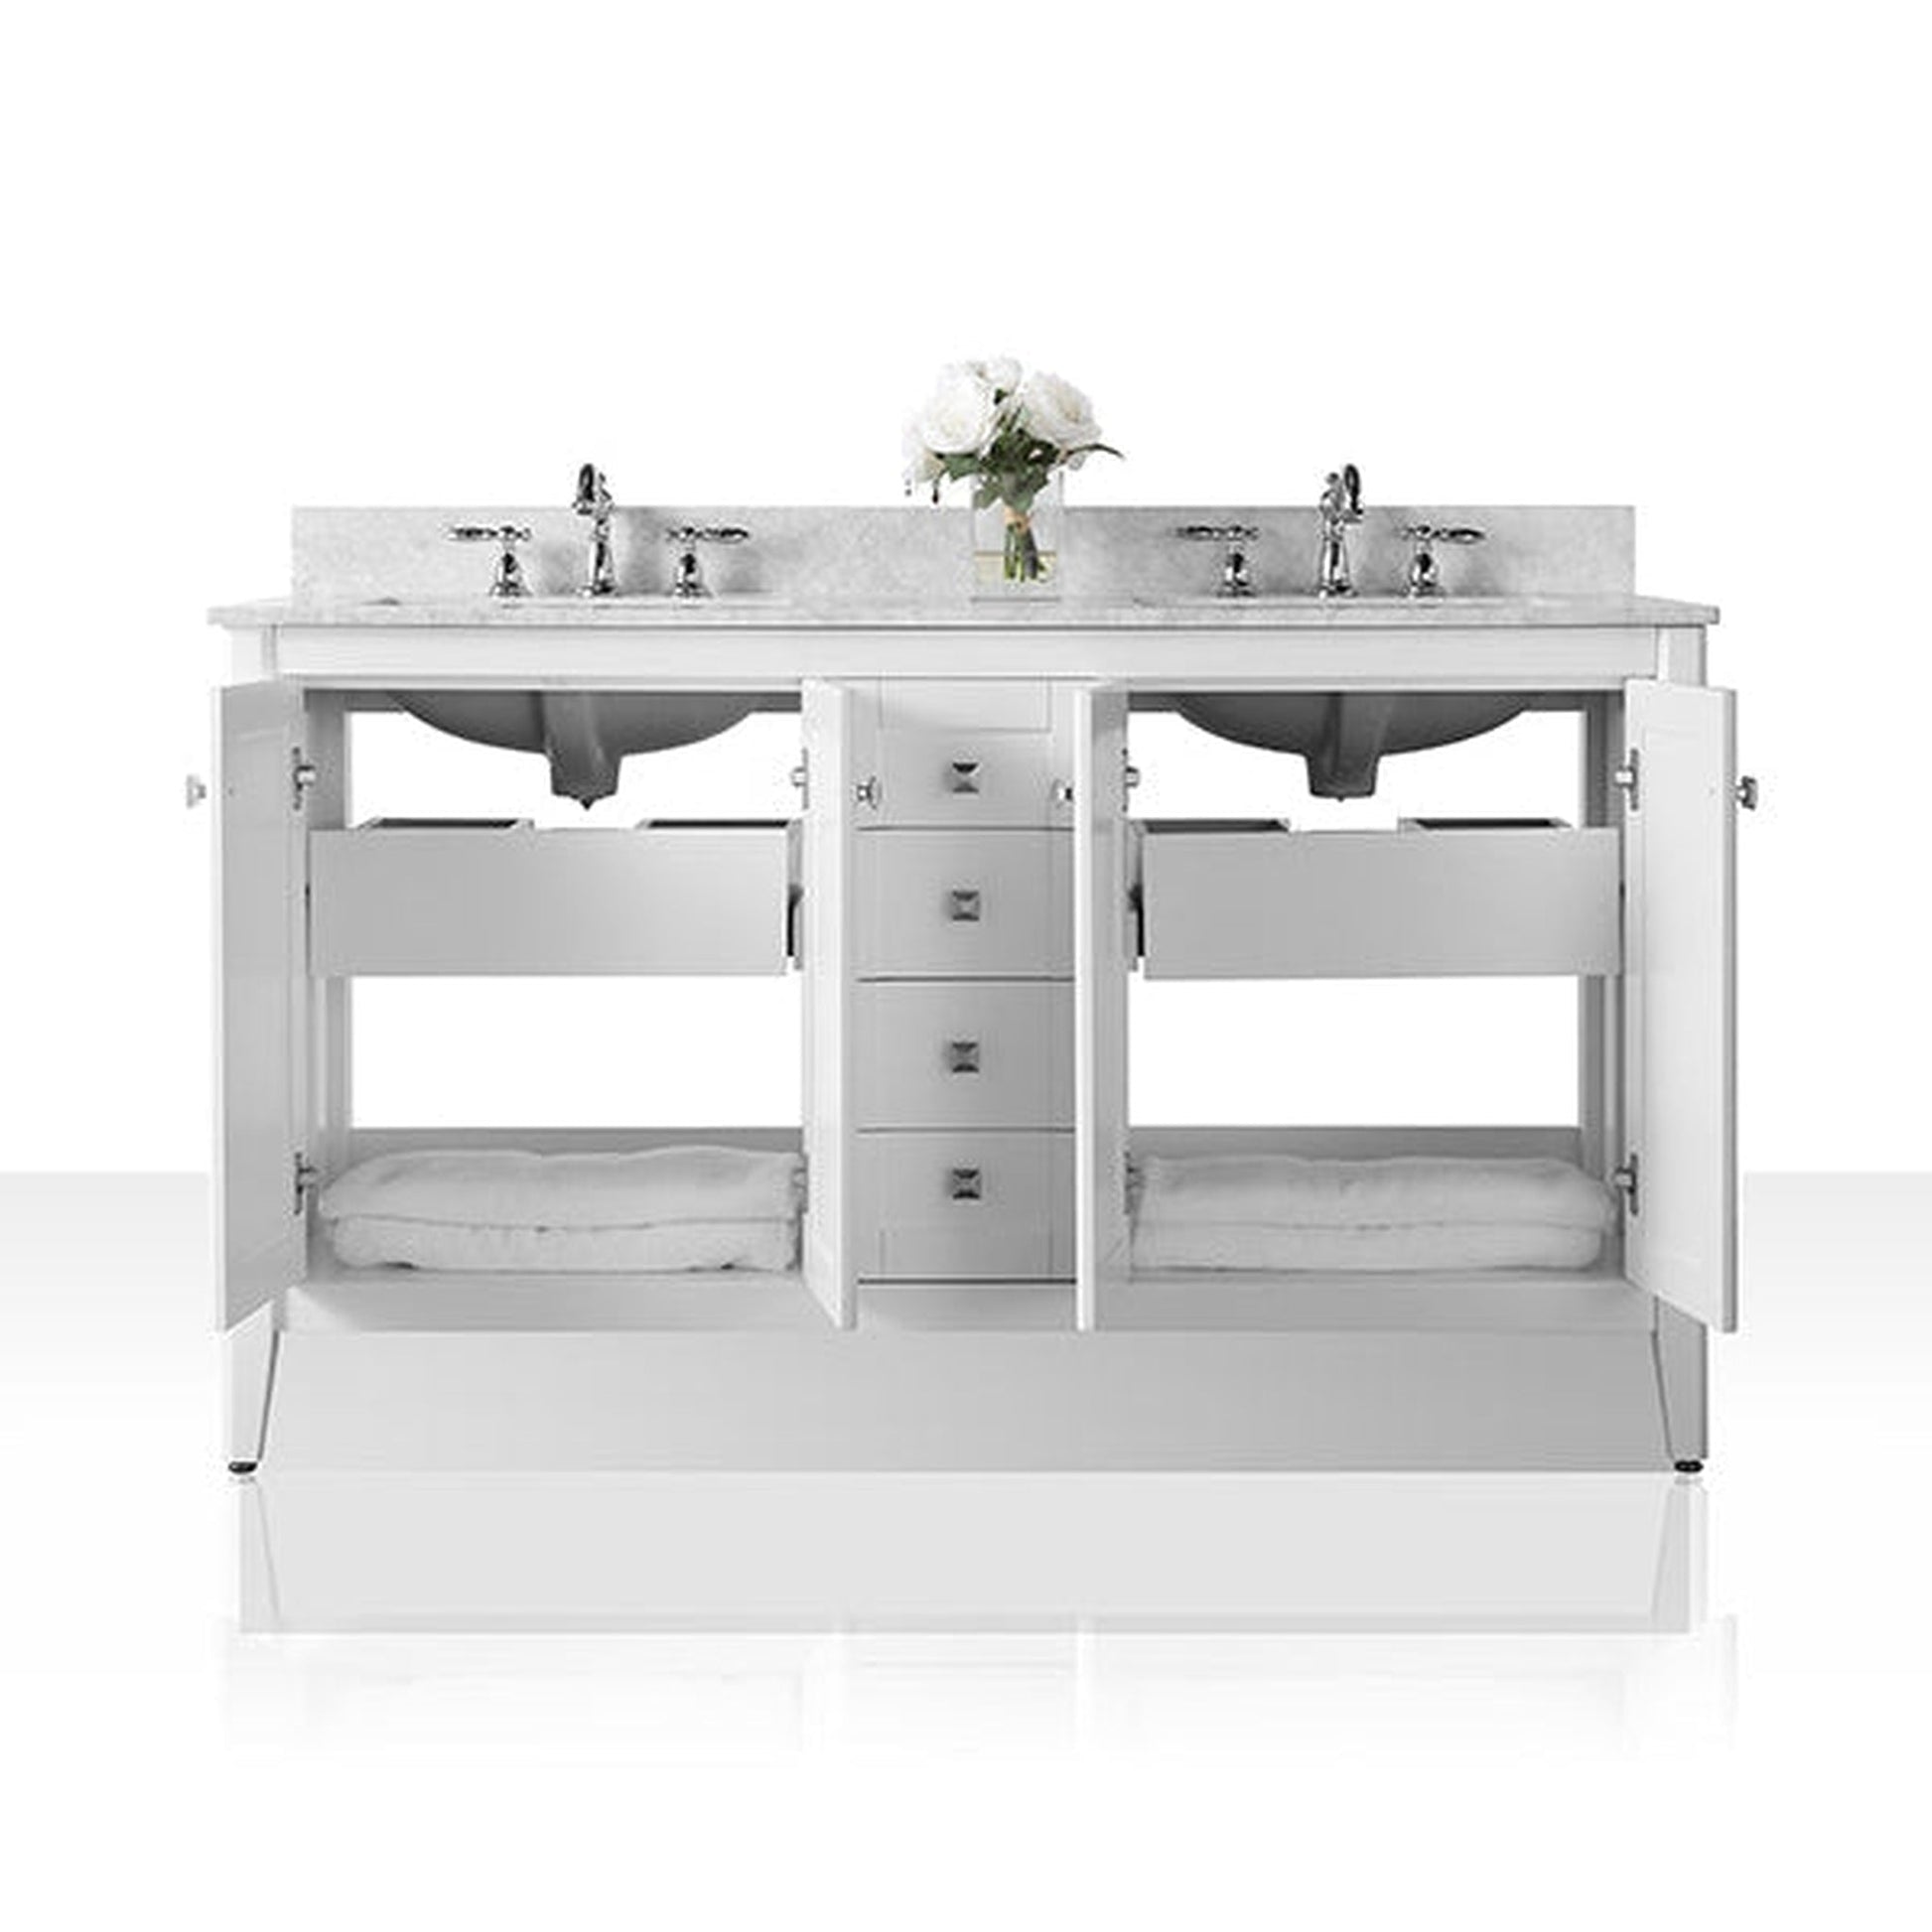 Ancerre Designs Shelton 60" White 4-Door ,6-Drawer Bath Vanity With Italian Carrara White Marble Vanity Top, Double Wide cUPC Rectangular Undermount Ceramic Sinks And 4” Backsplash